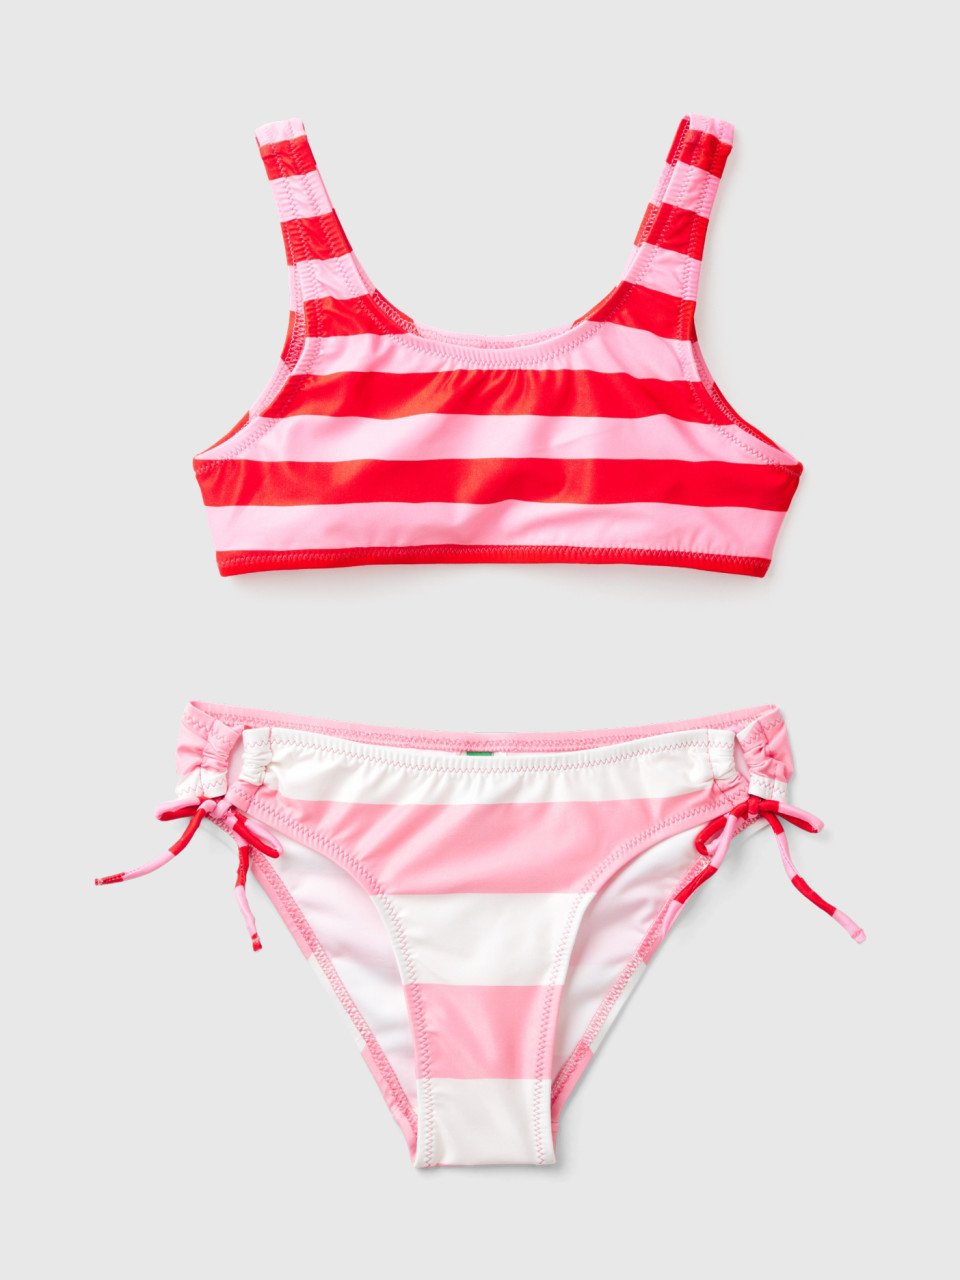 Benetton, Striped Beach Bikini, Multi-color, Kids